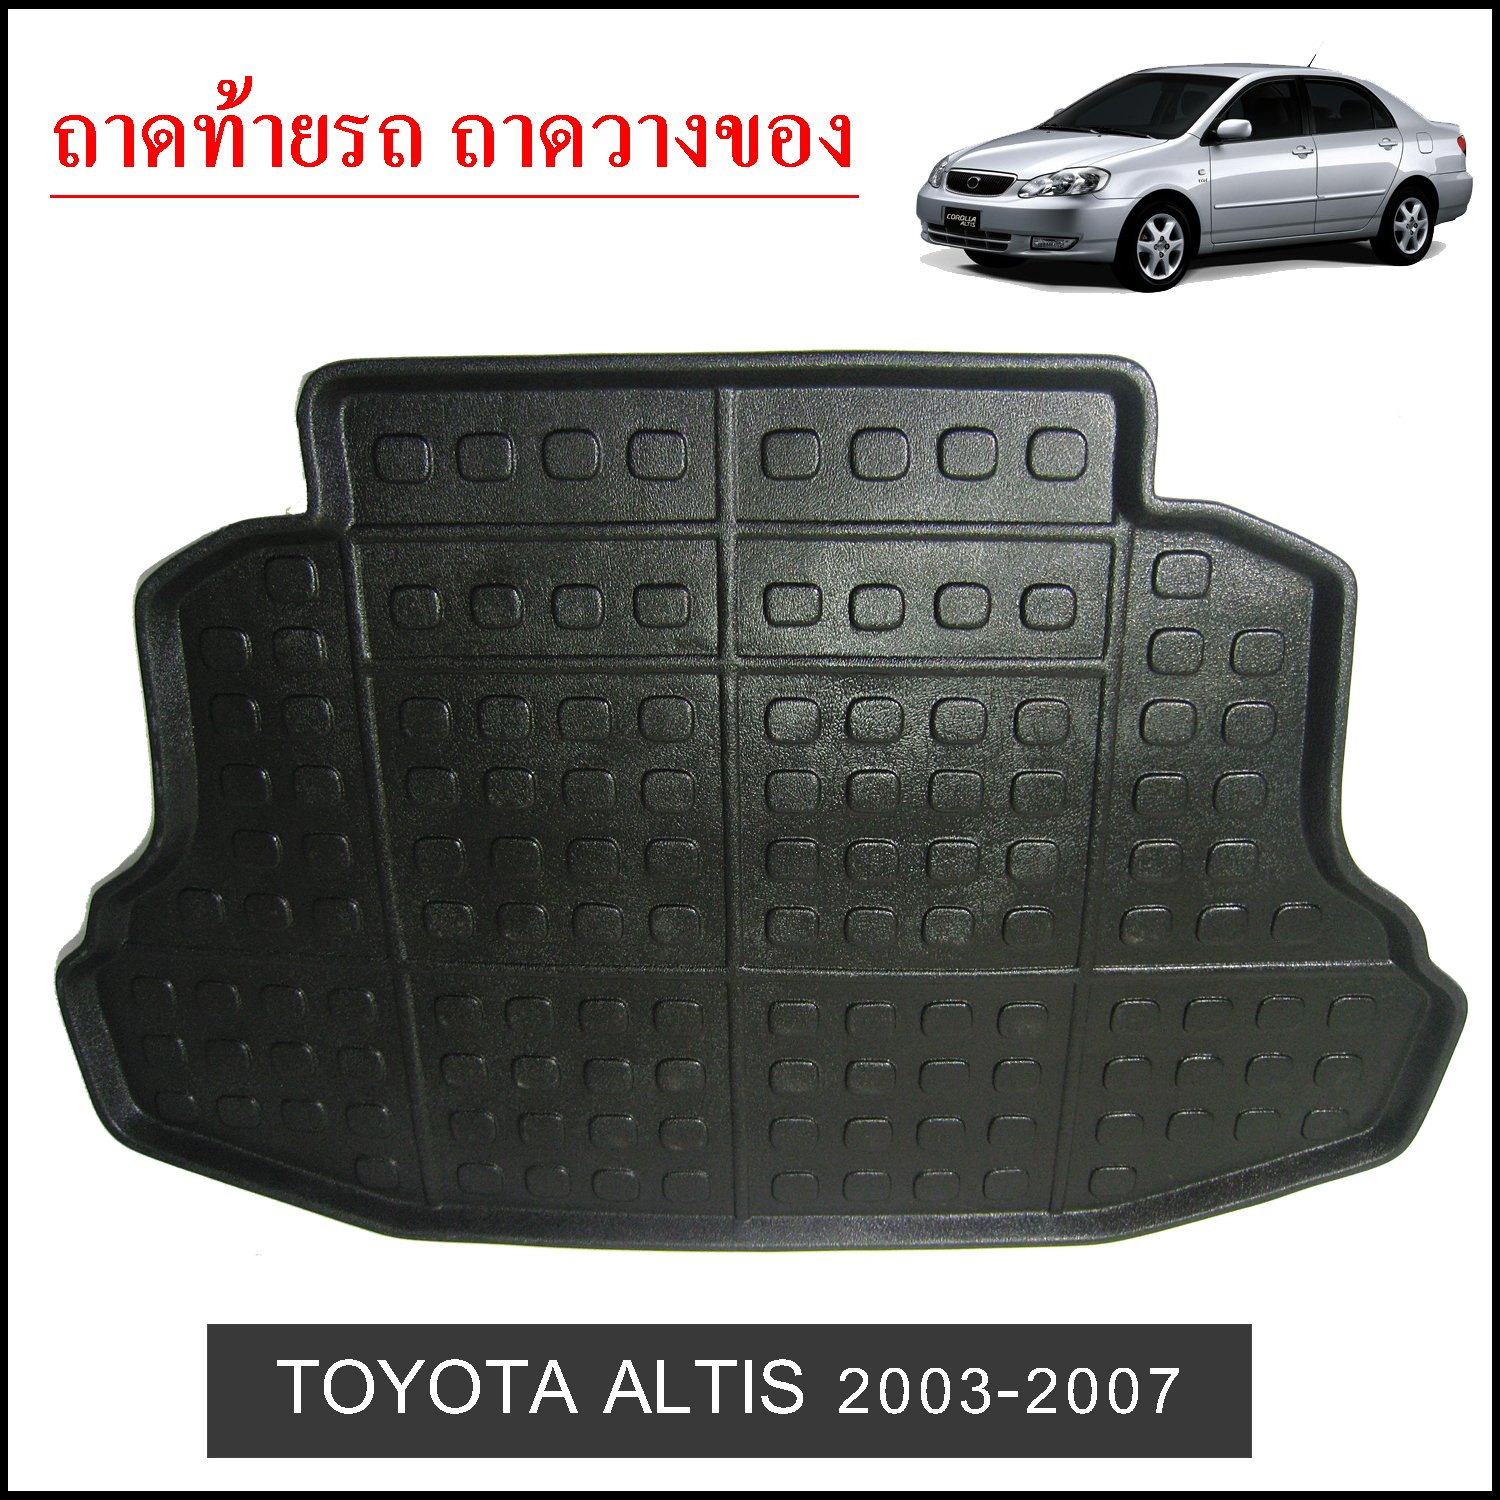 Toyota Altis 2003-2007